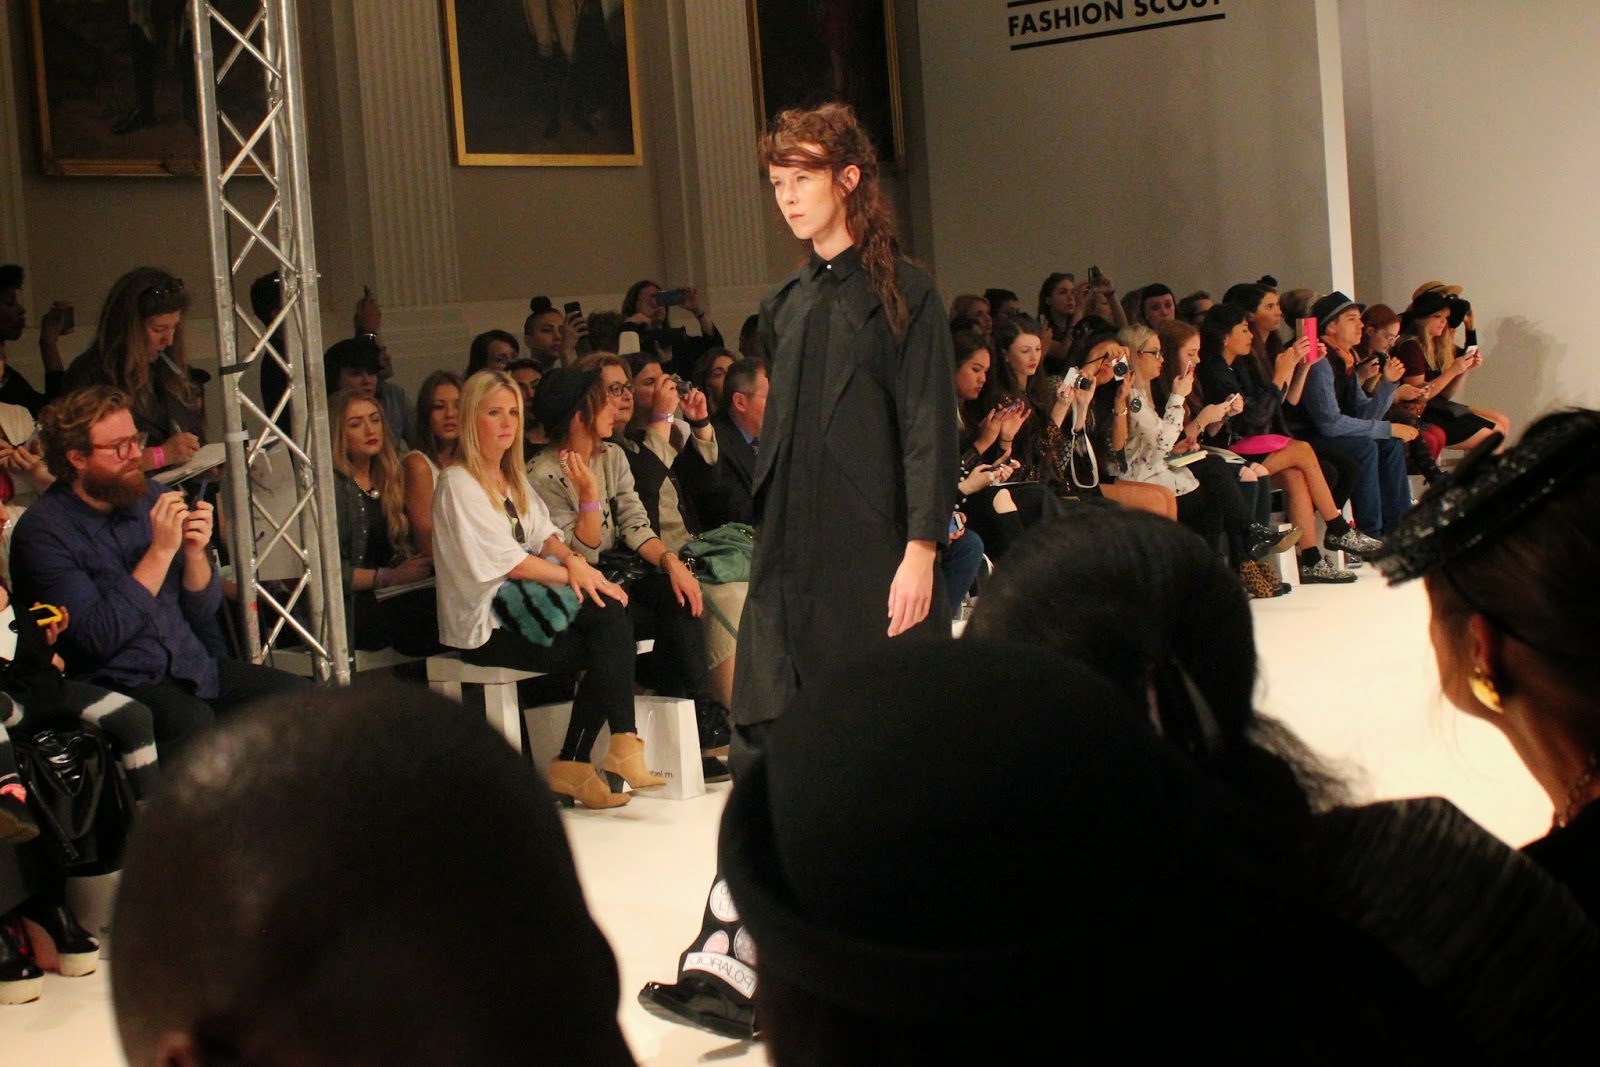 london-fashion-week-2014-lfw-spring-summer-2015-blogger-fashion-Dioralop-catwalk-models-freemasons hall-fashion-scout-shirt-dress-shoes